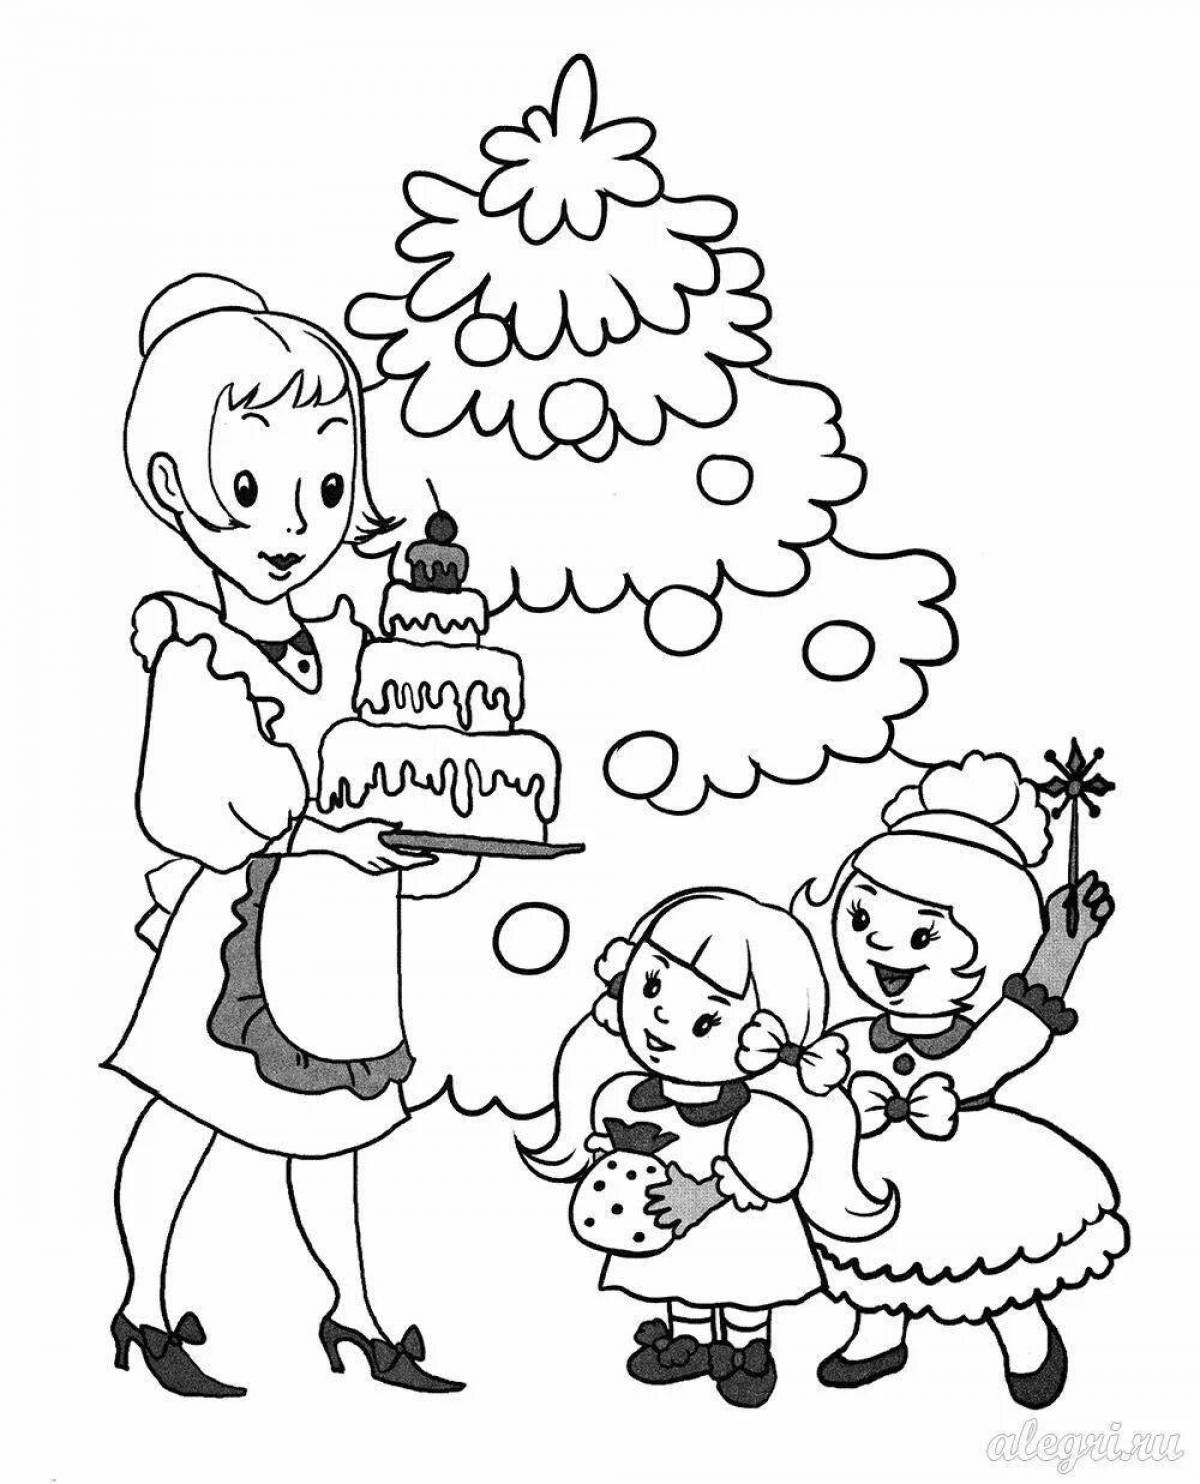 Festive children decorating the Christmas tree